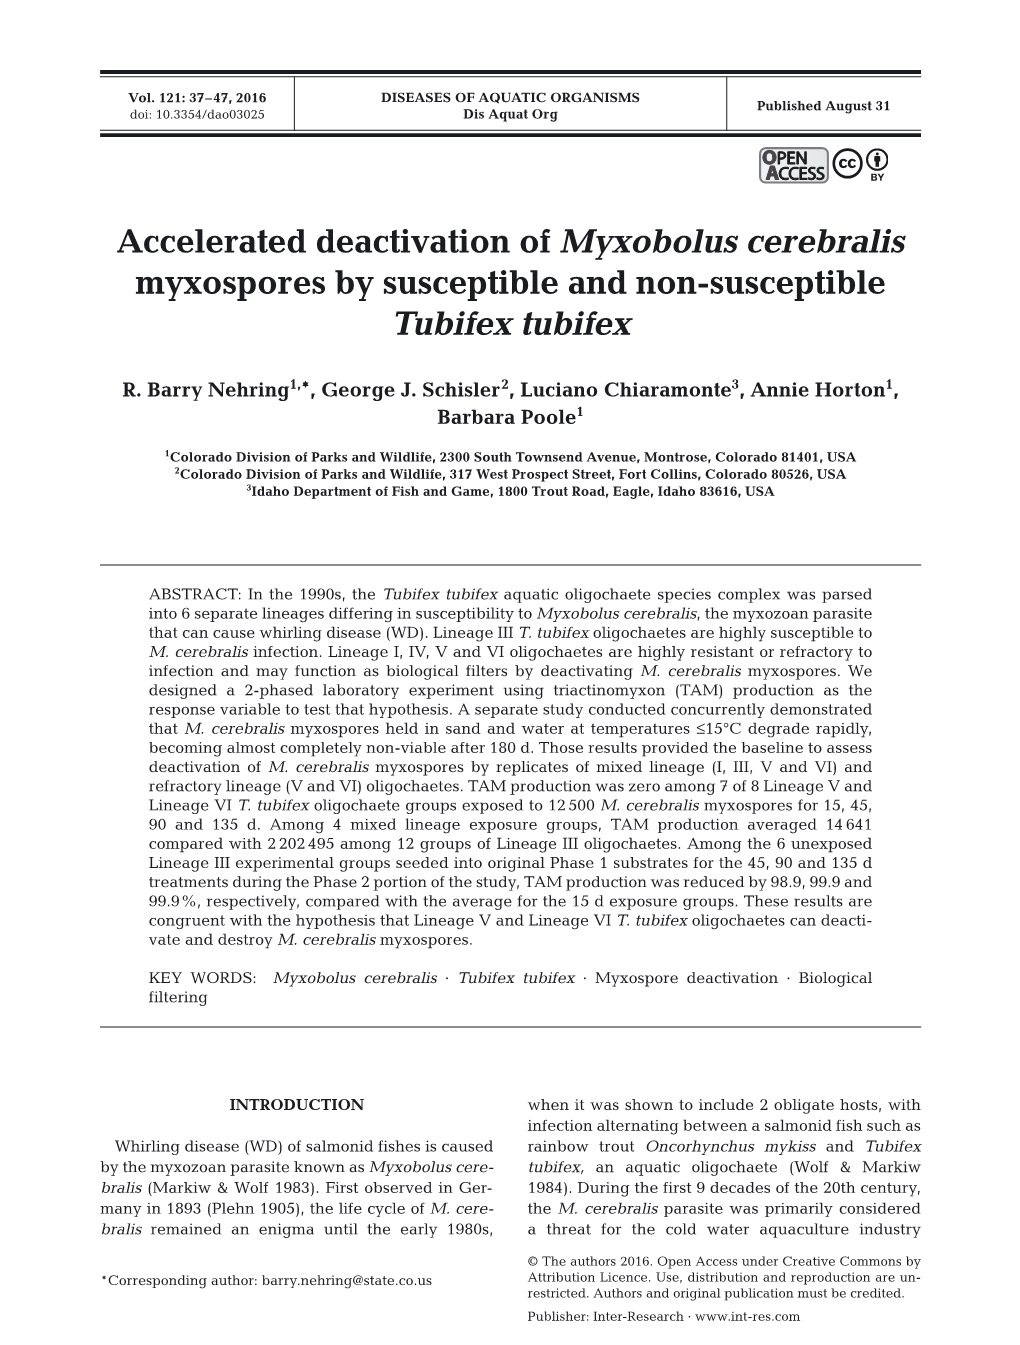 Accelerated Deactivation of Myxobolus Cerebralis Myxospores by Susceptible and Non-Susceptible Tubifex Tubifex